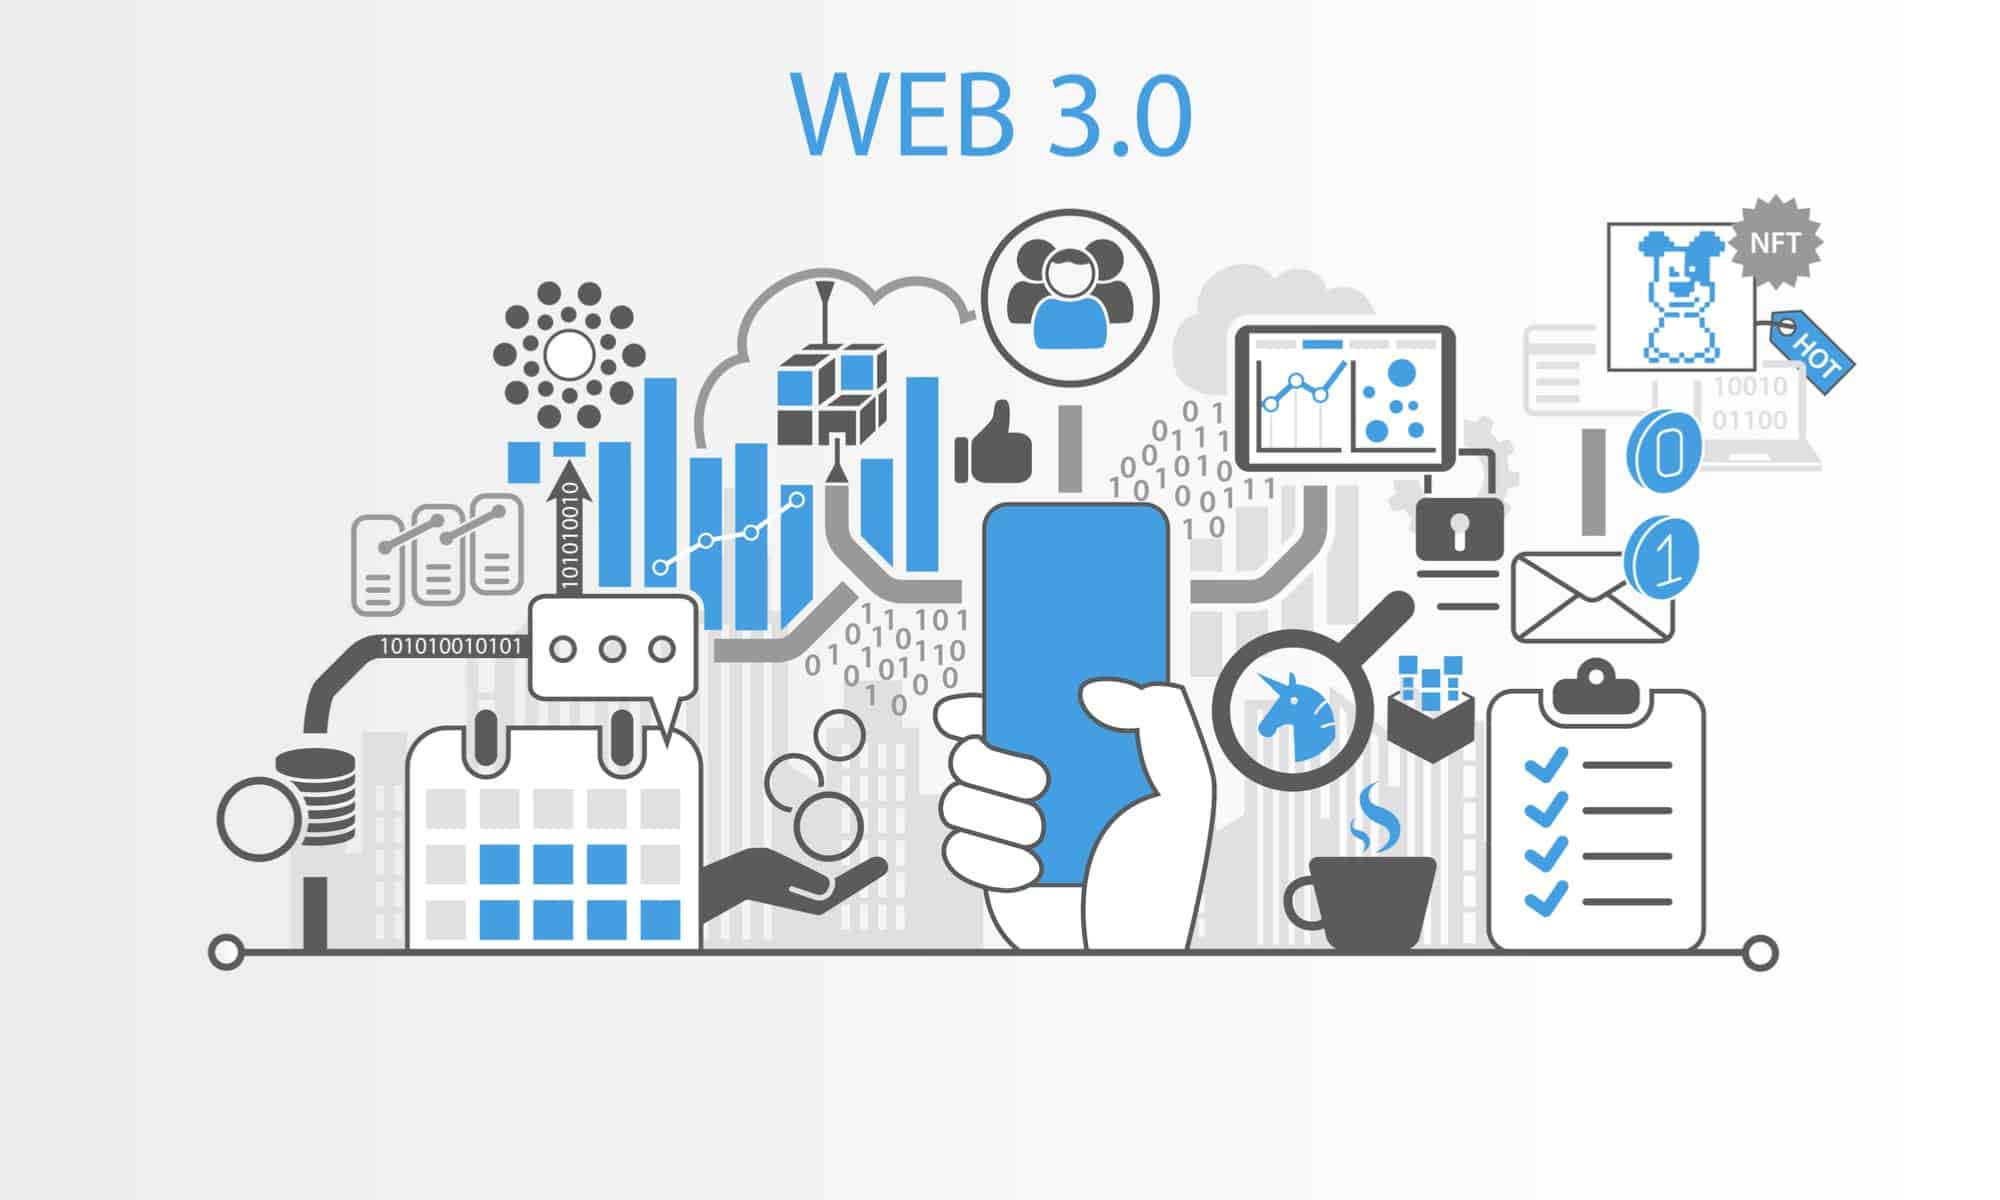 HISTORY OF WEB 3.0